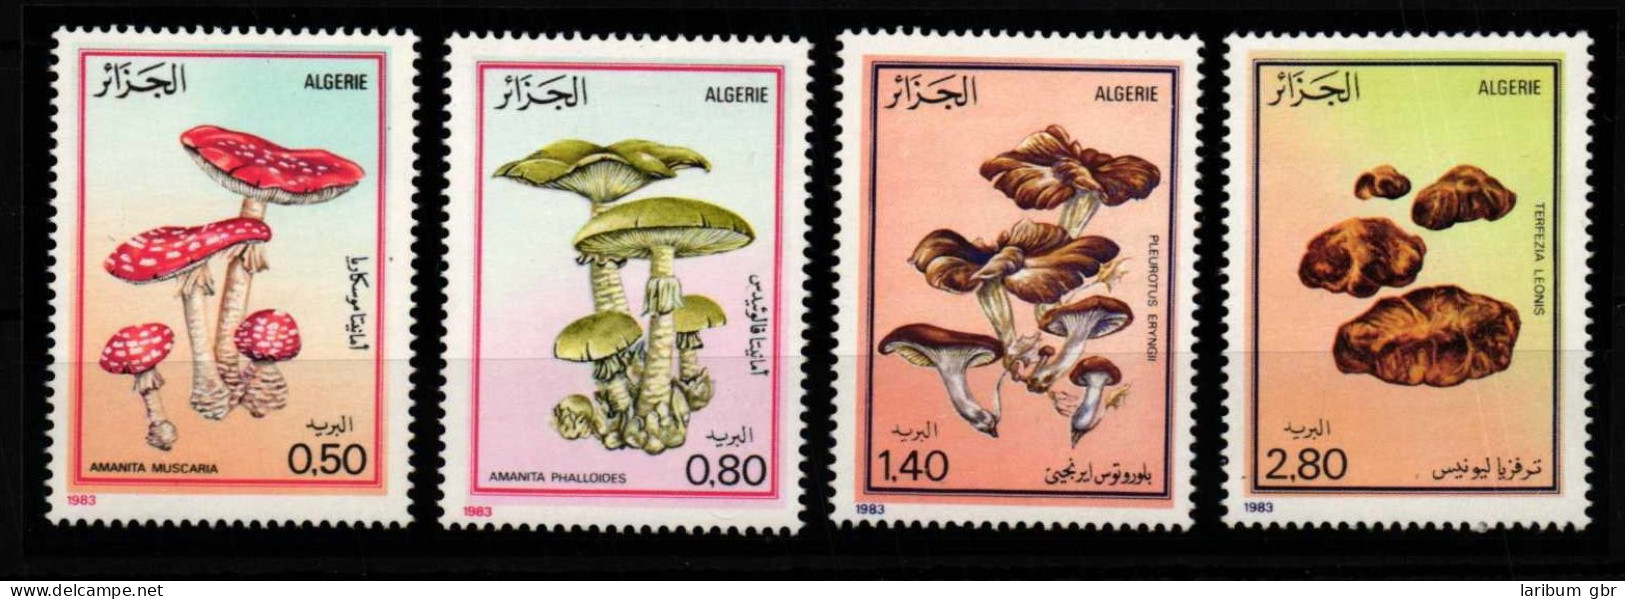 Algerien 827-830 Postfrisch Pilze #HQ333 - Algerien (1962-...)